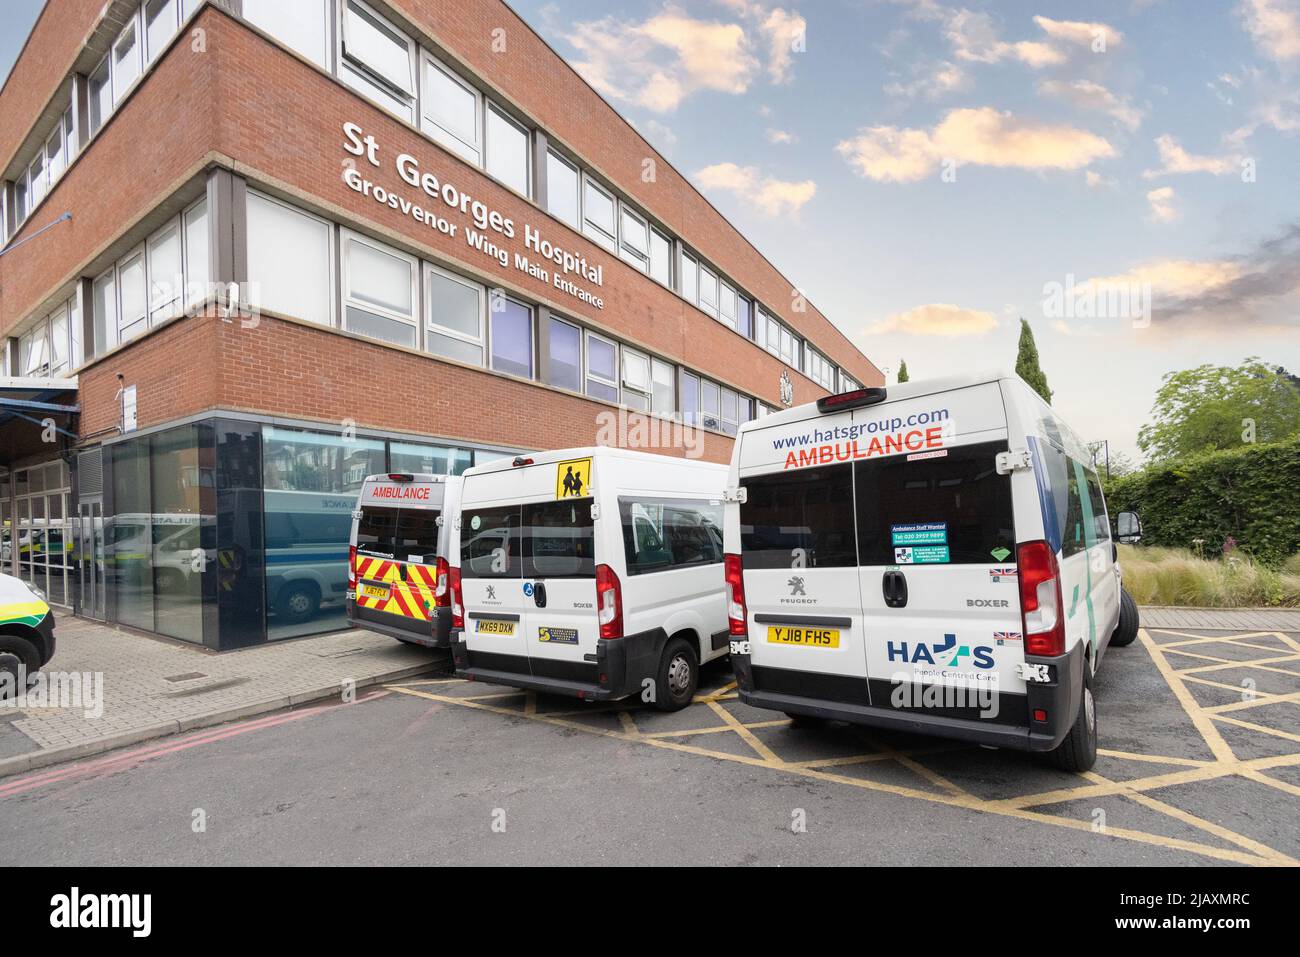 St Georges Hospital London UK - Außenansicht mit Krankenwagen des NHS, St Georges, London Teaching Hospital Medical School, Tooting London UK Stockfoto